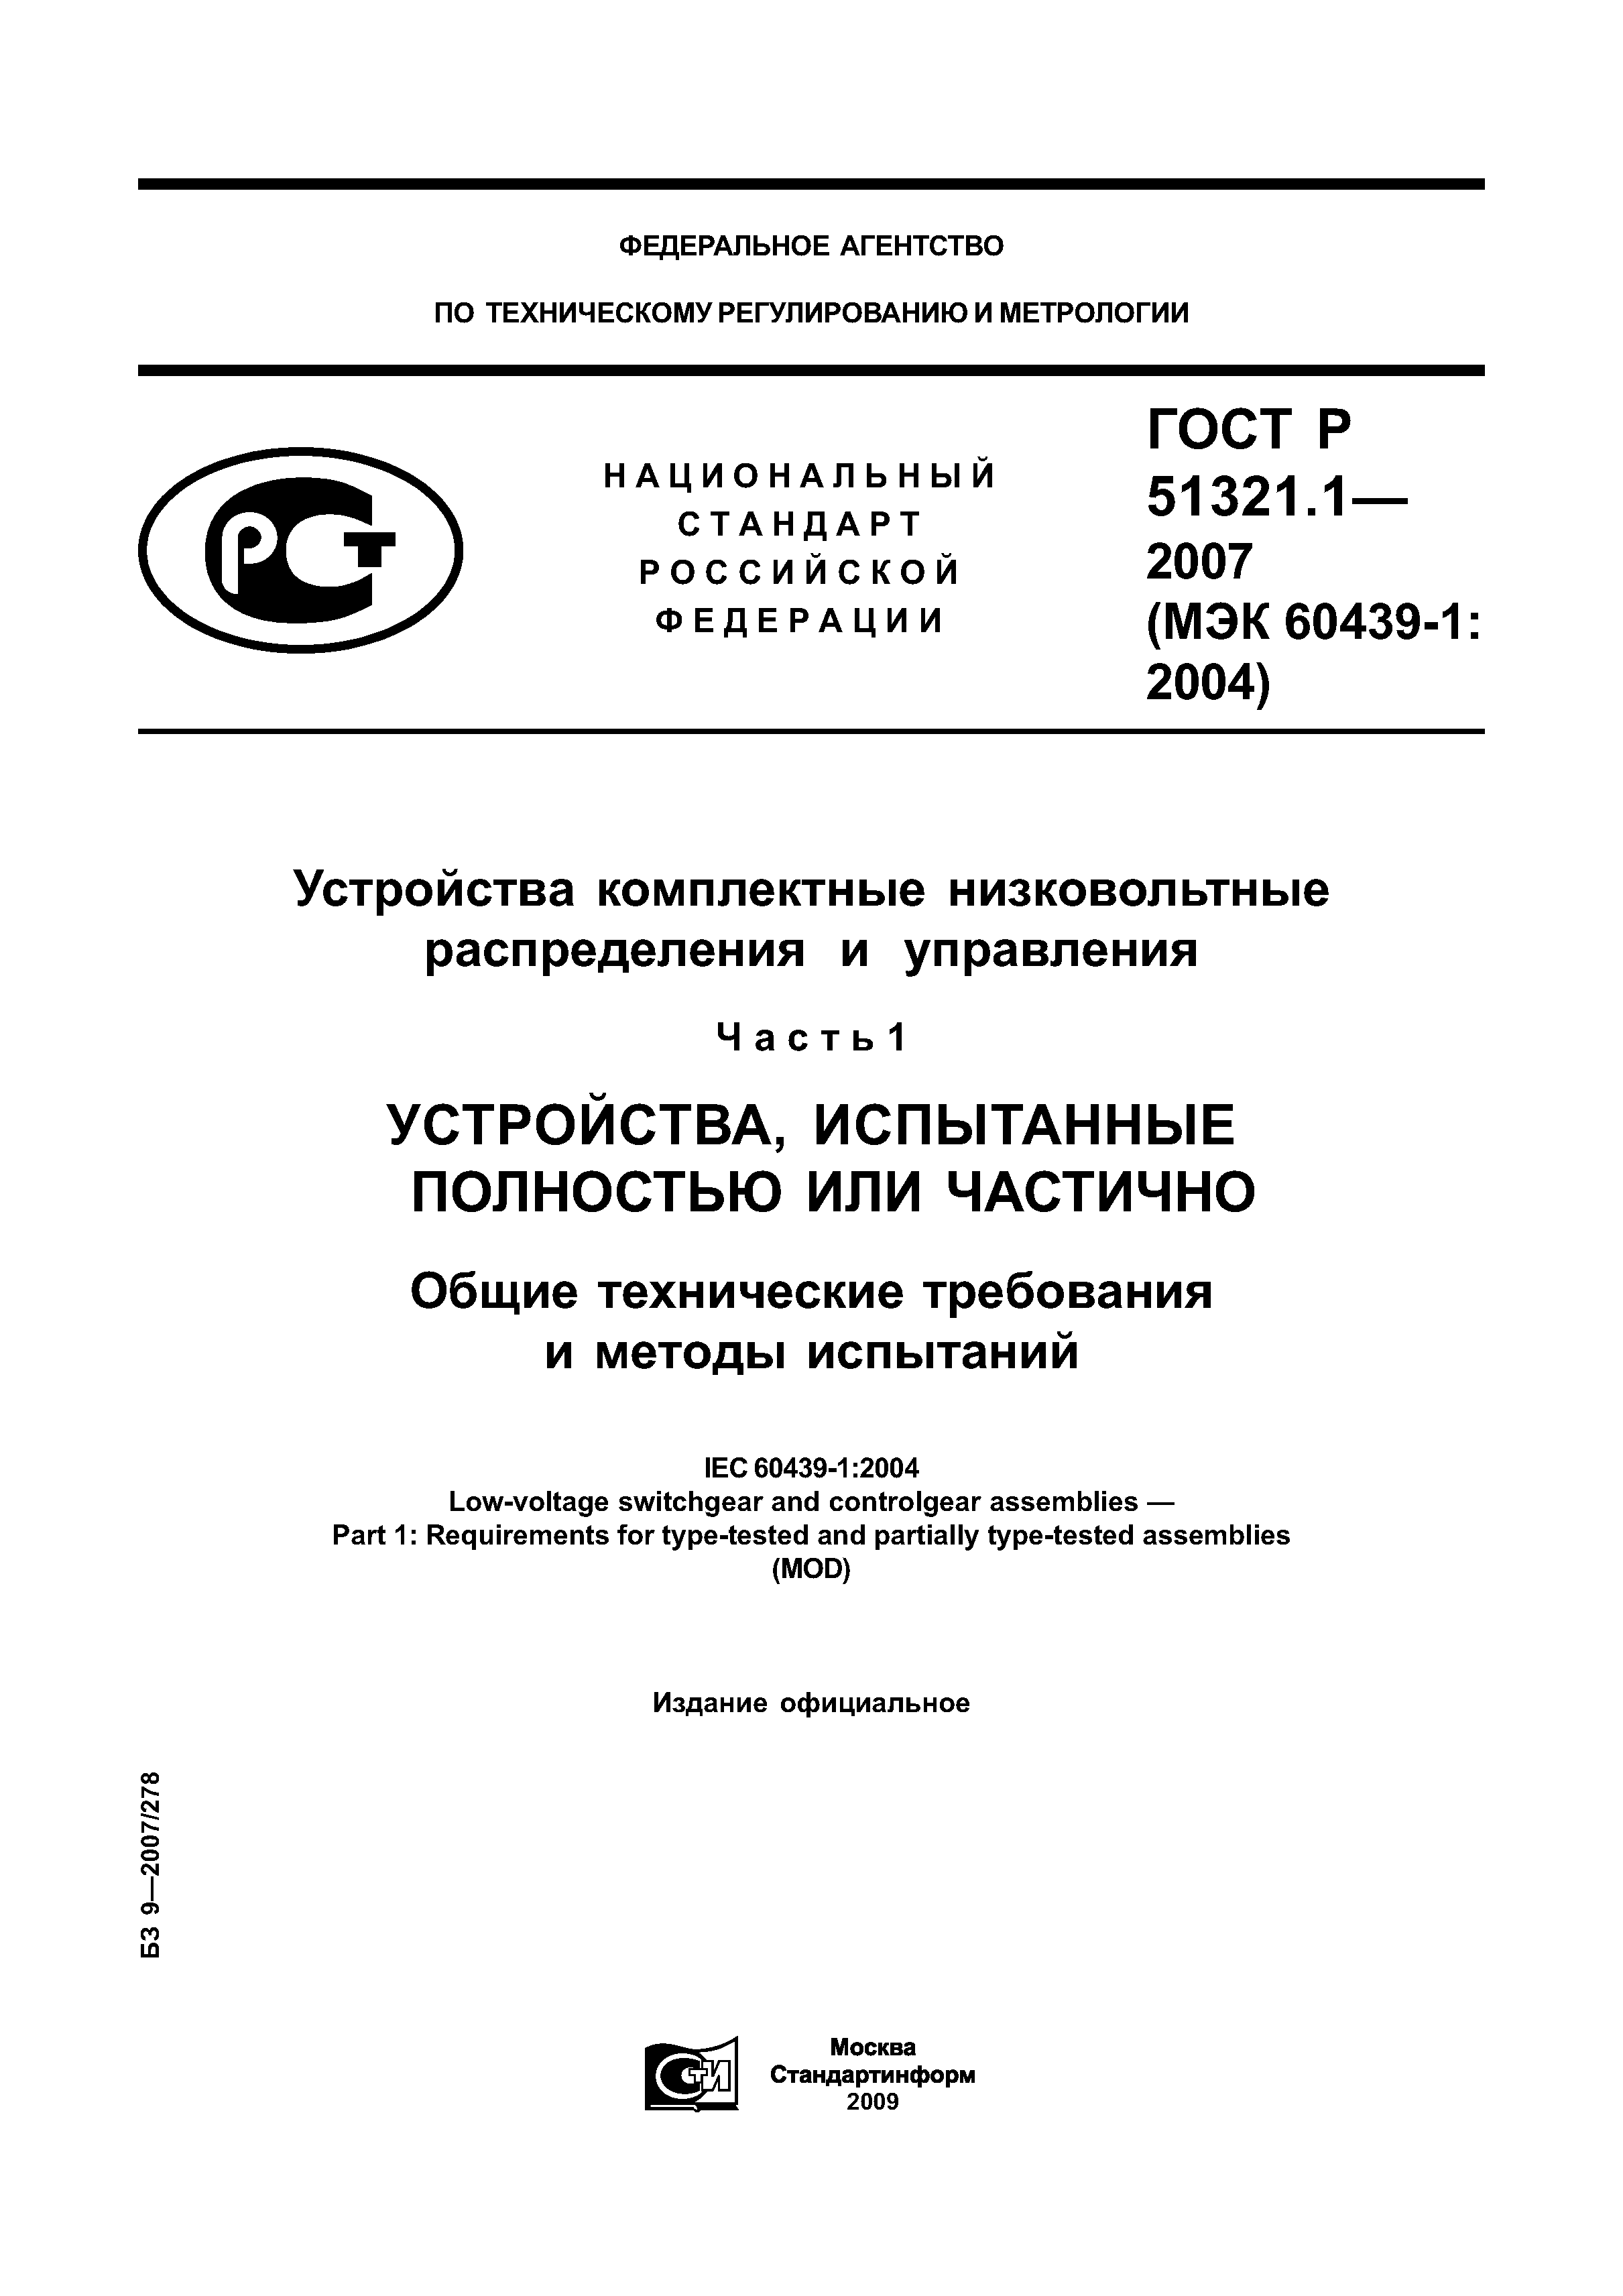 ГОСТ Р 51321.1-2007